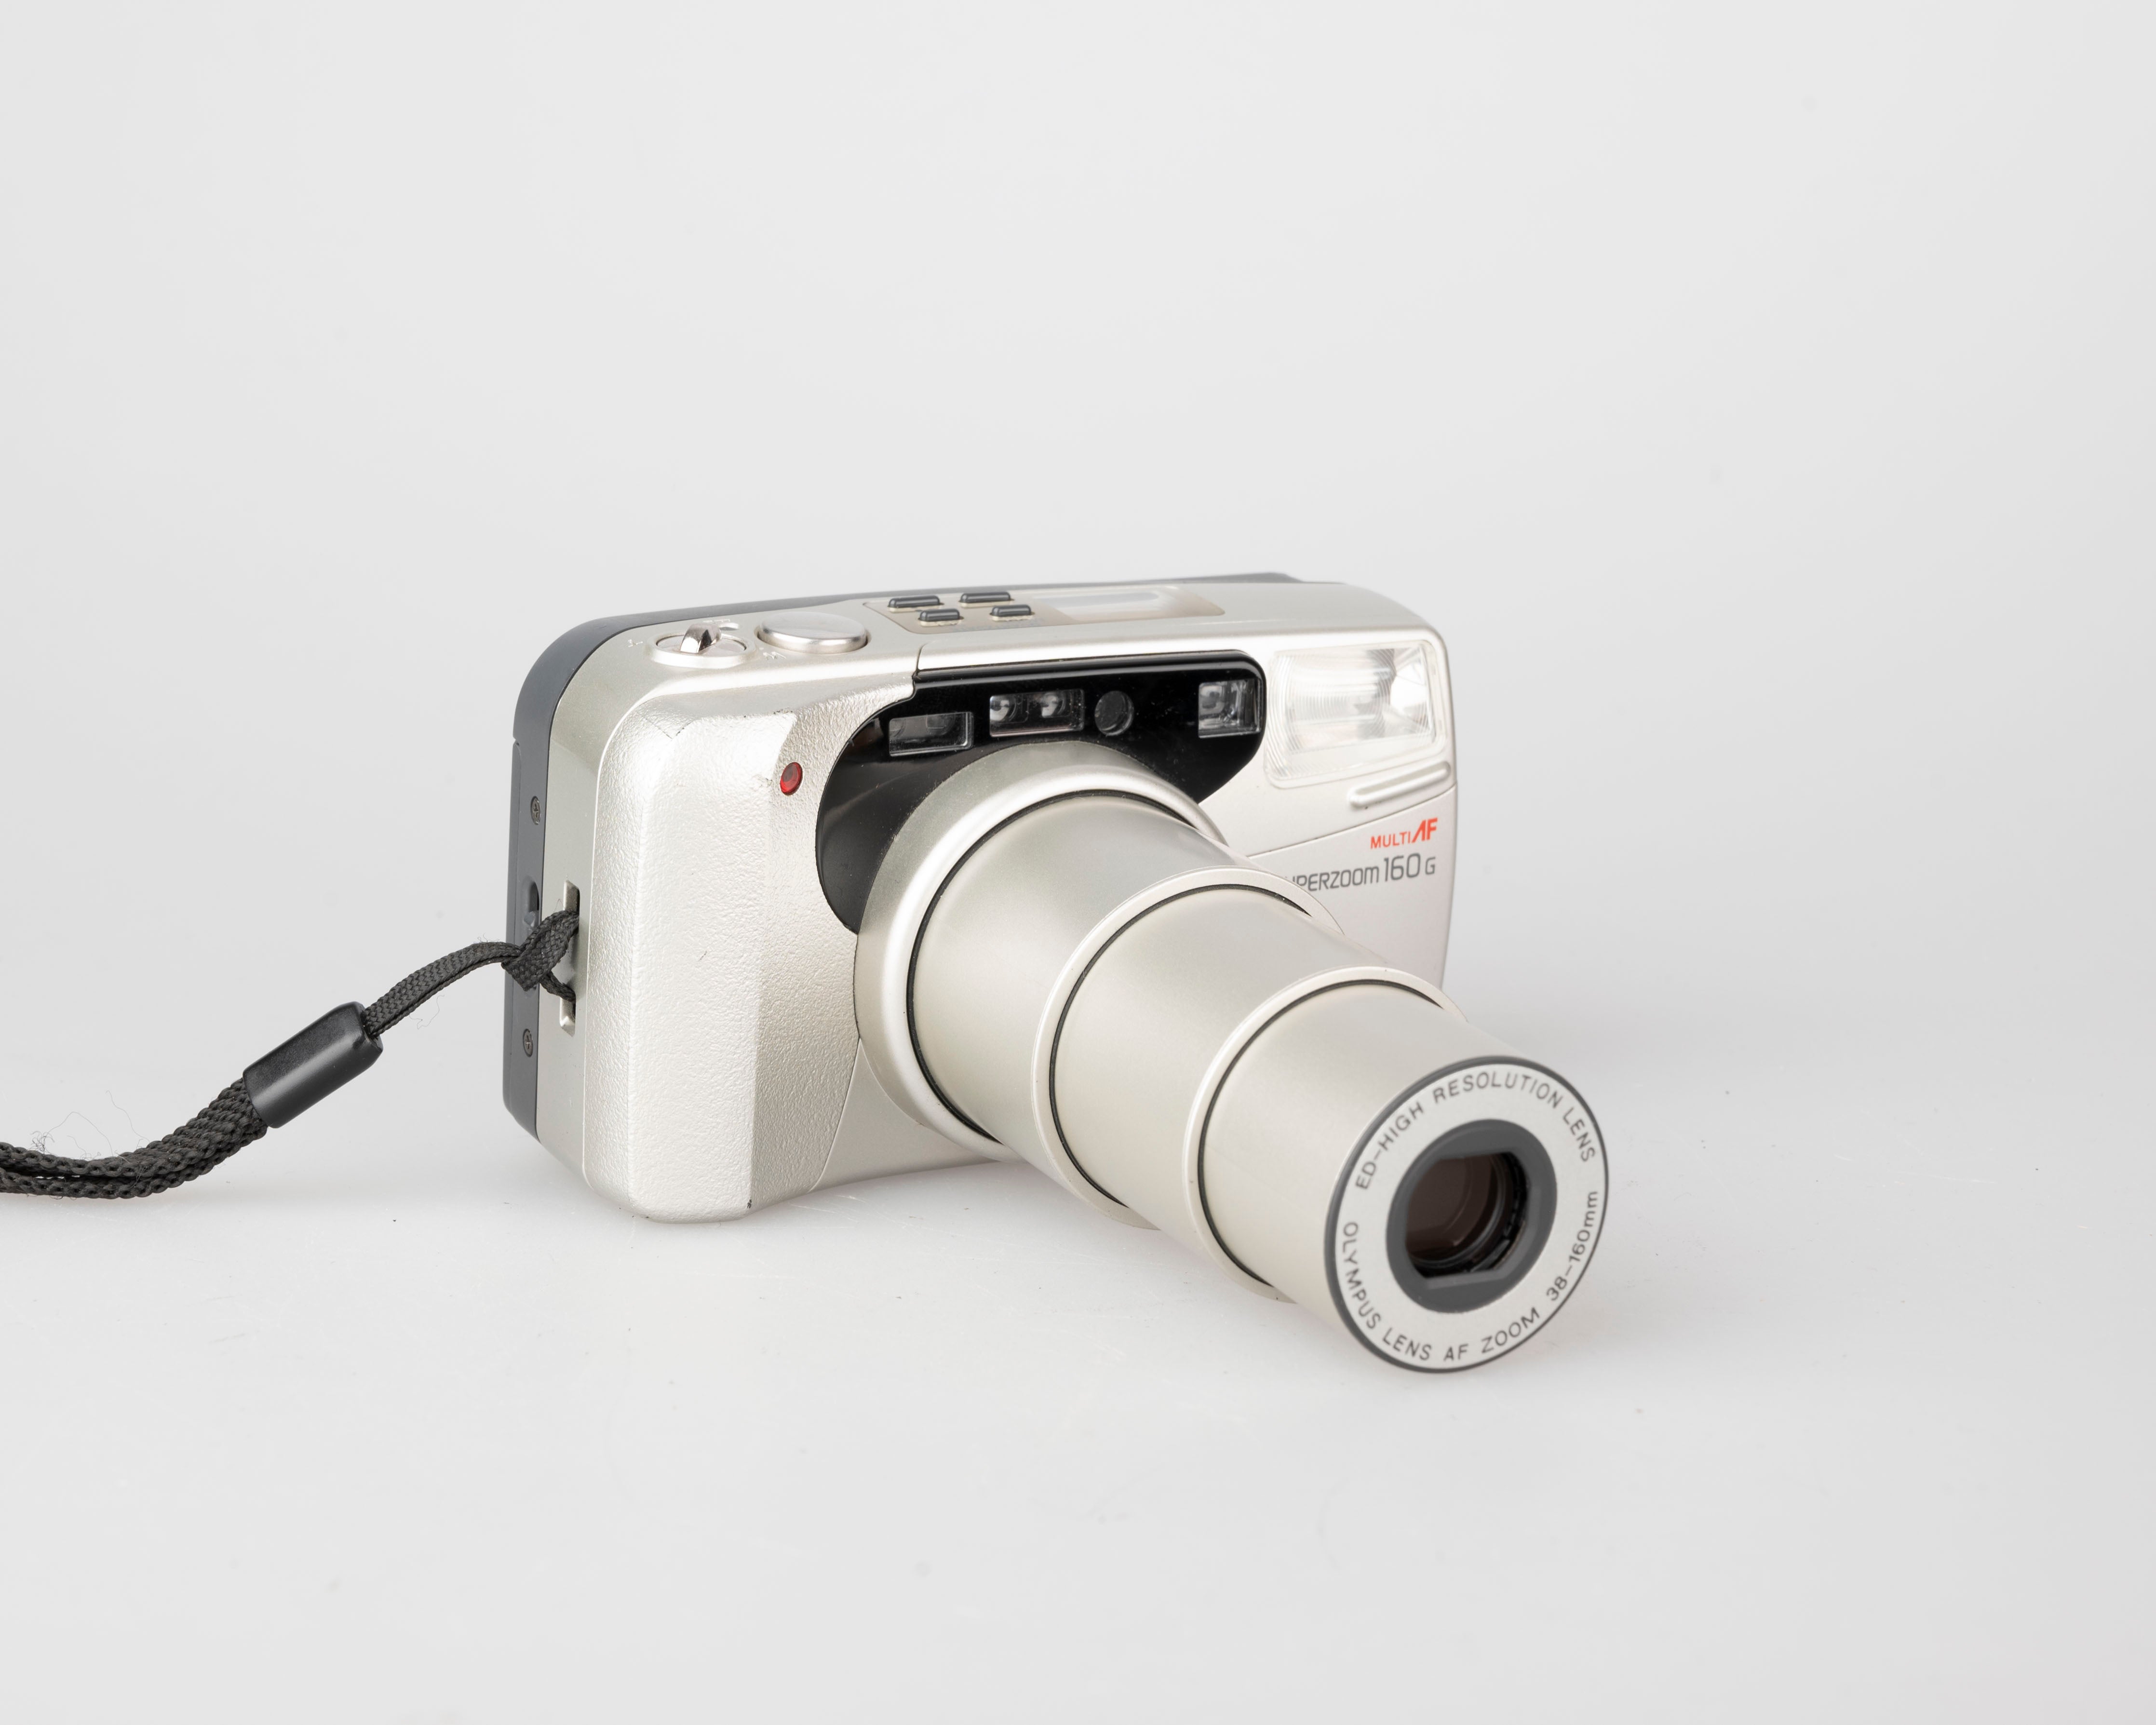 Olympus Superzoom 160G 35mm camera w/ case (serial 5023593) – New 